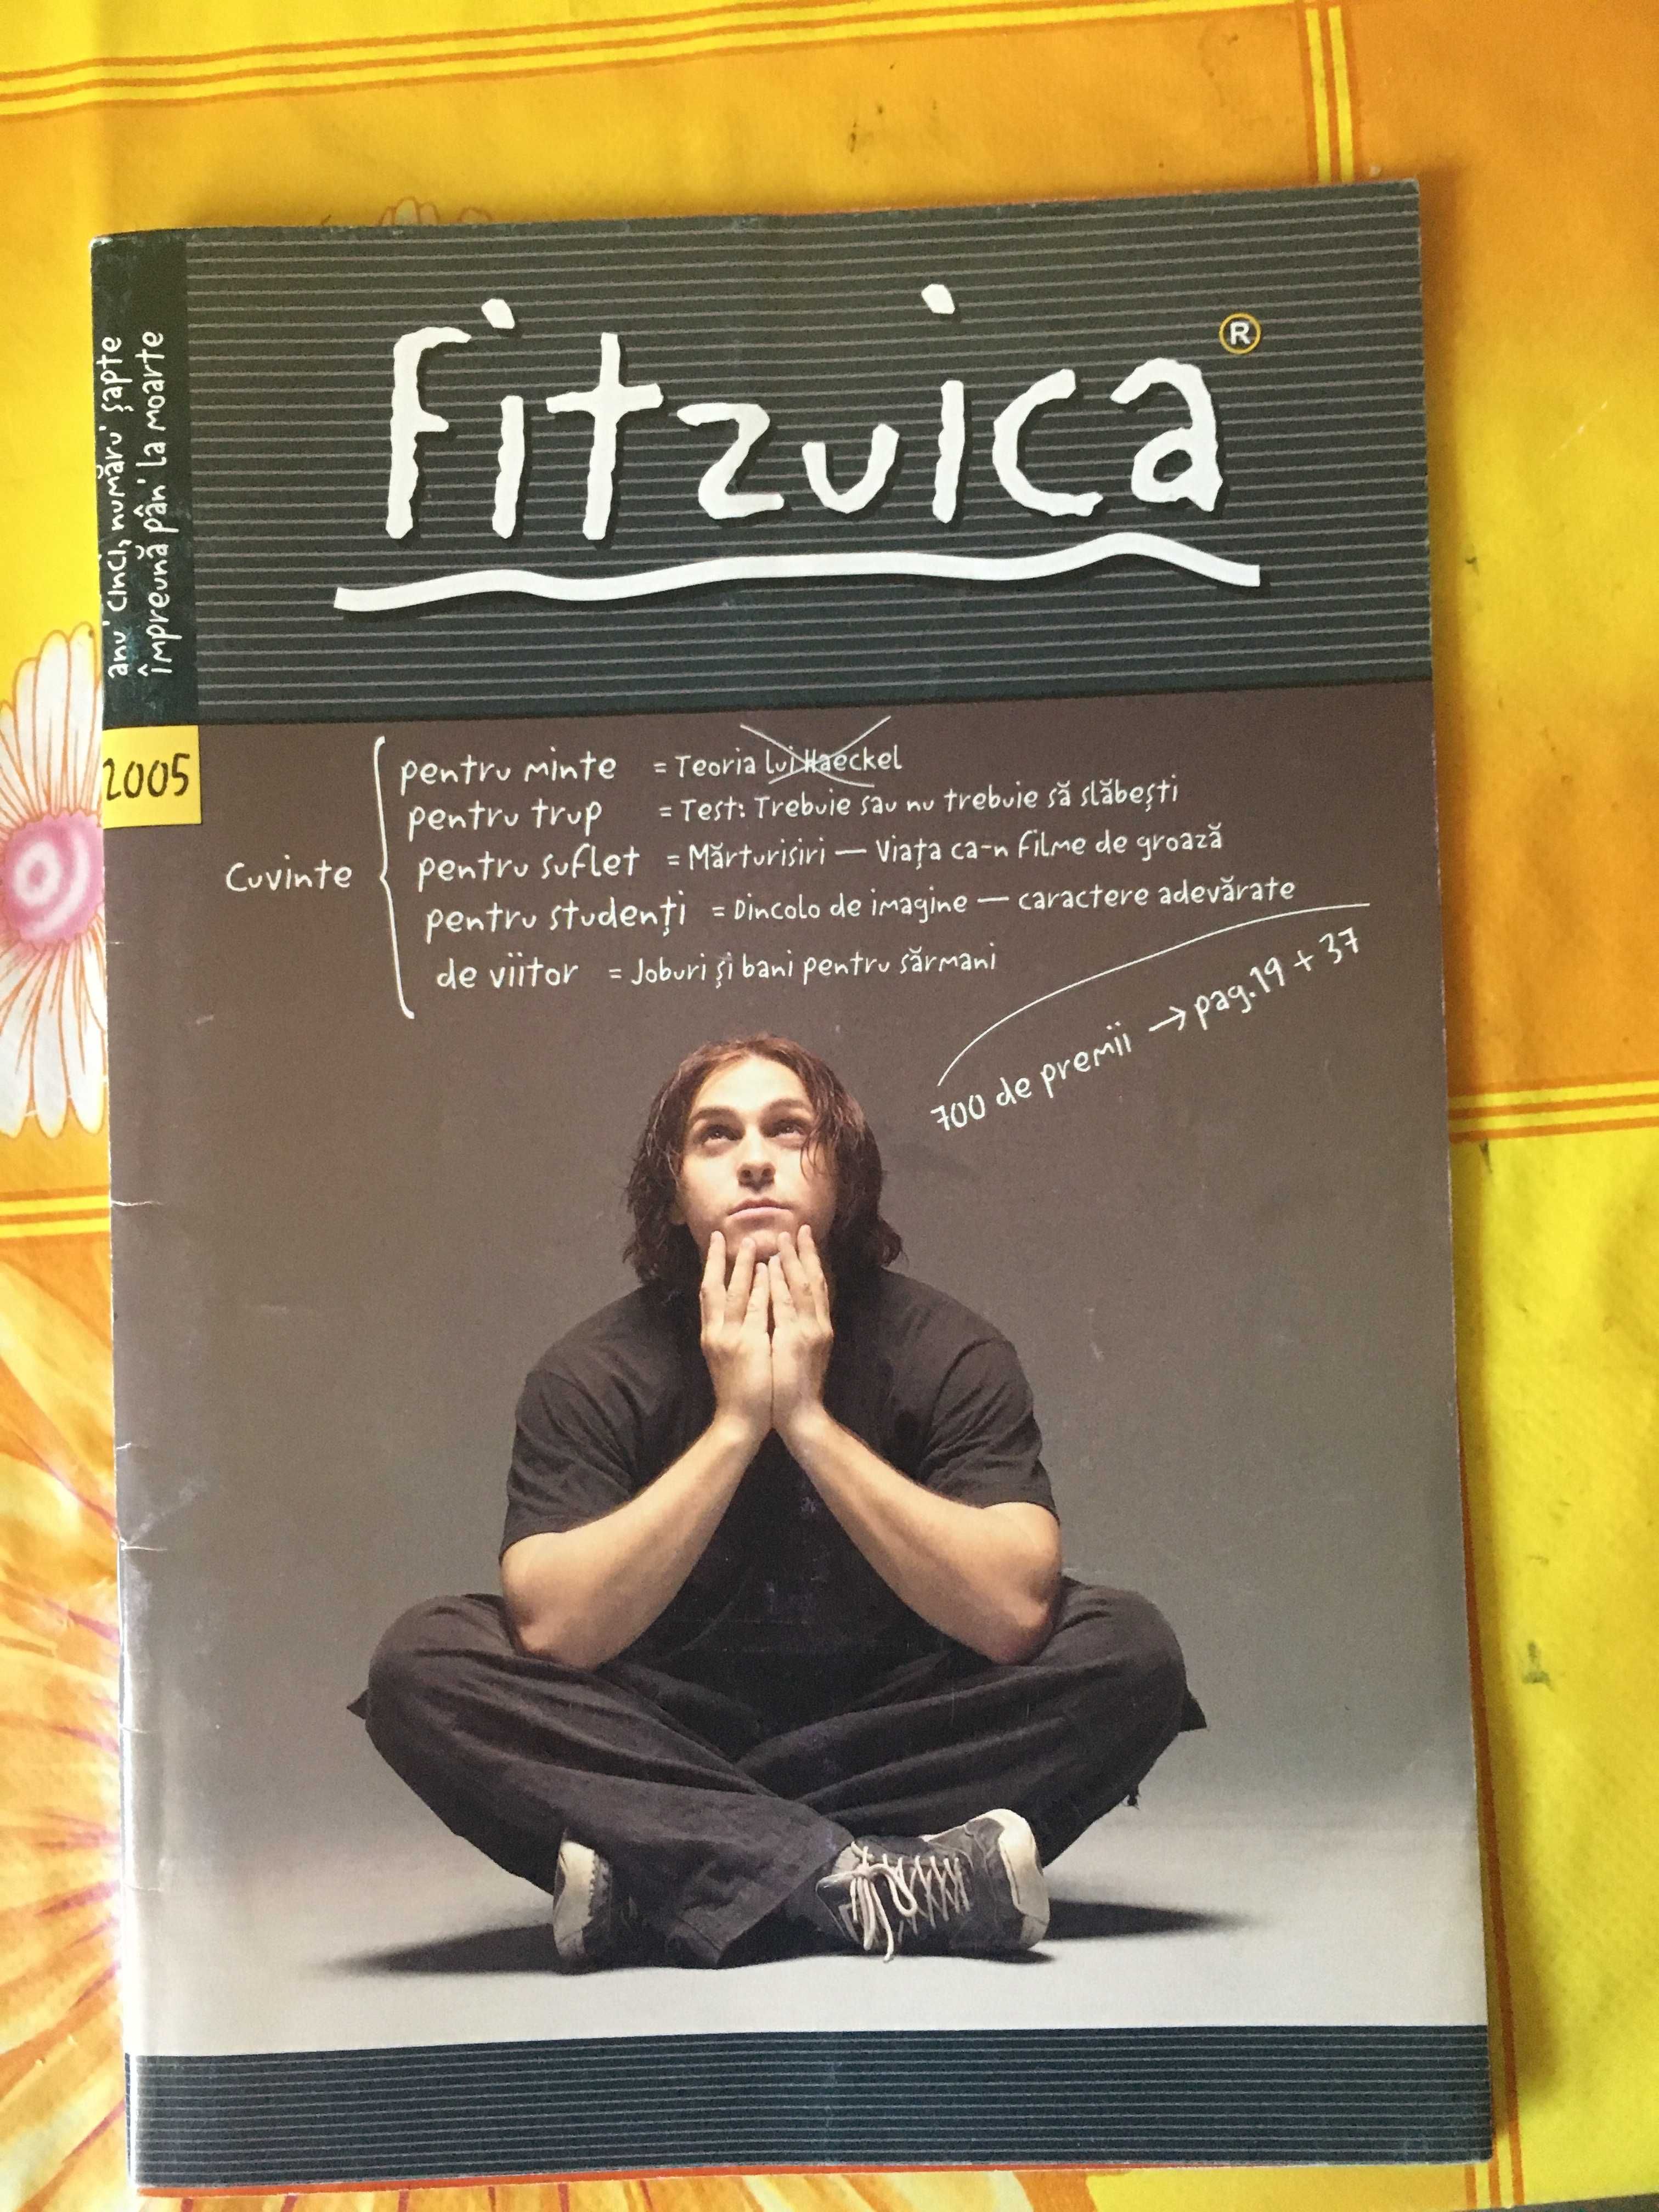 Revista Fitzuica pentru colectionari